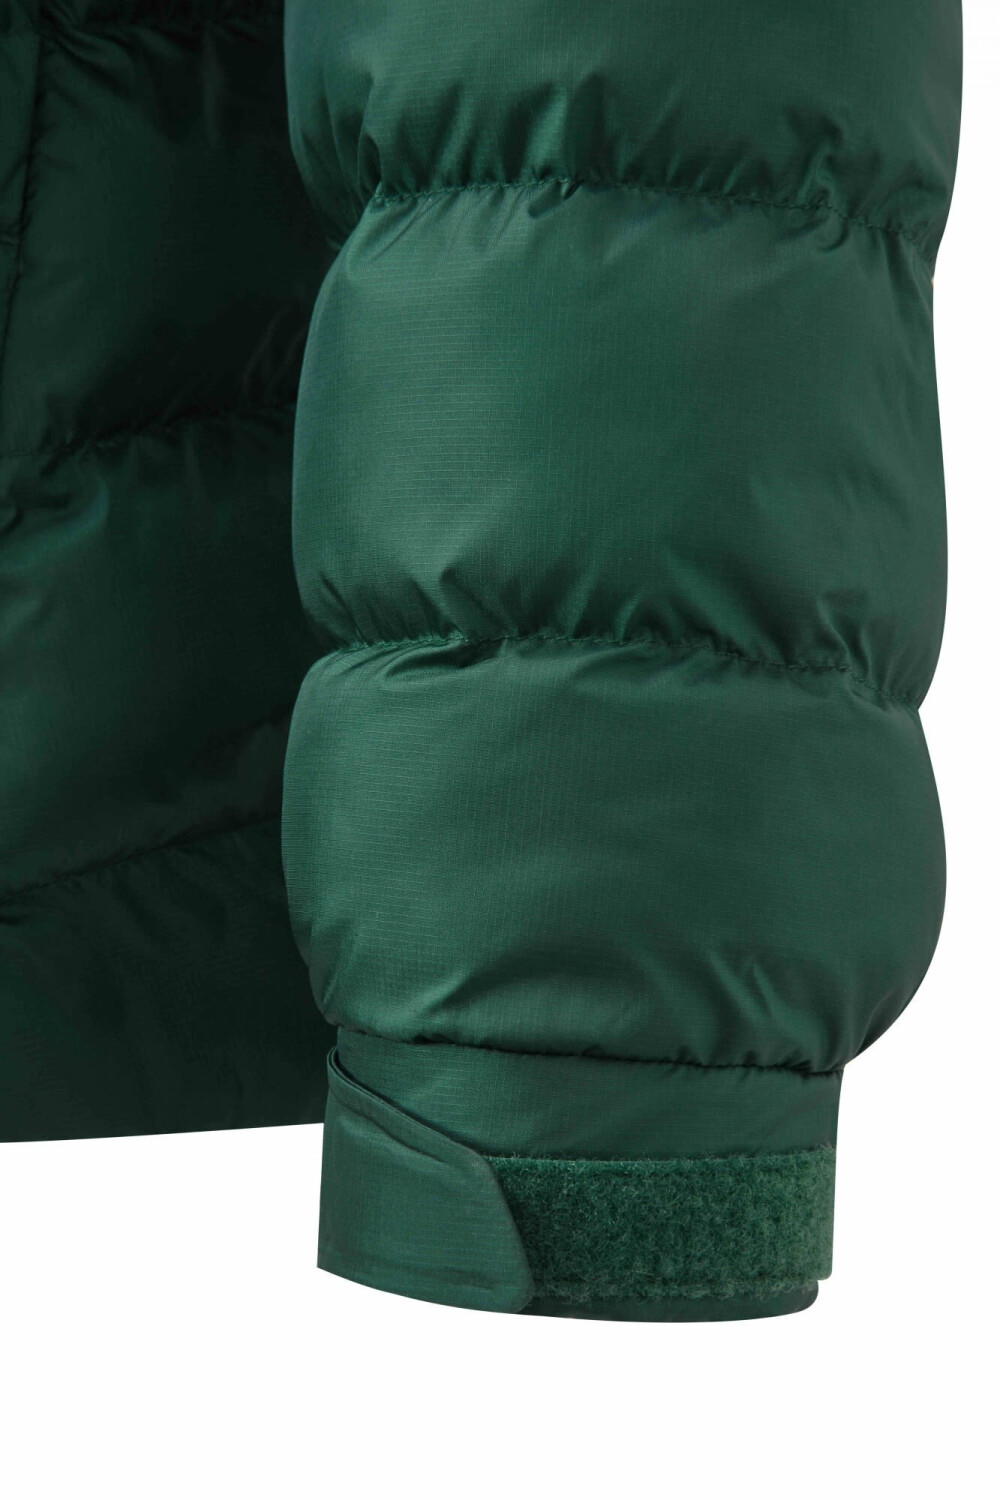 Buy Rab Nebula Pro Jacket sherwood green from £161.64 (Today) – Best ...